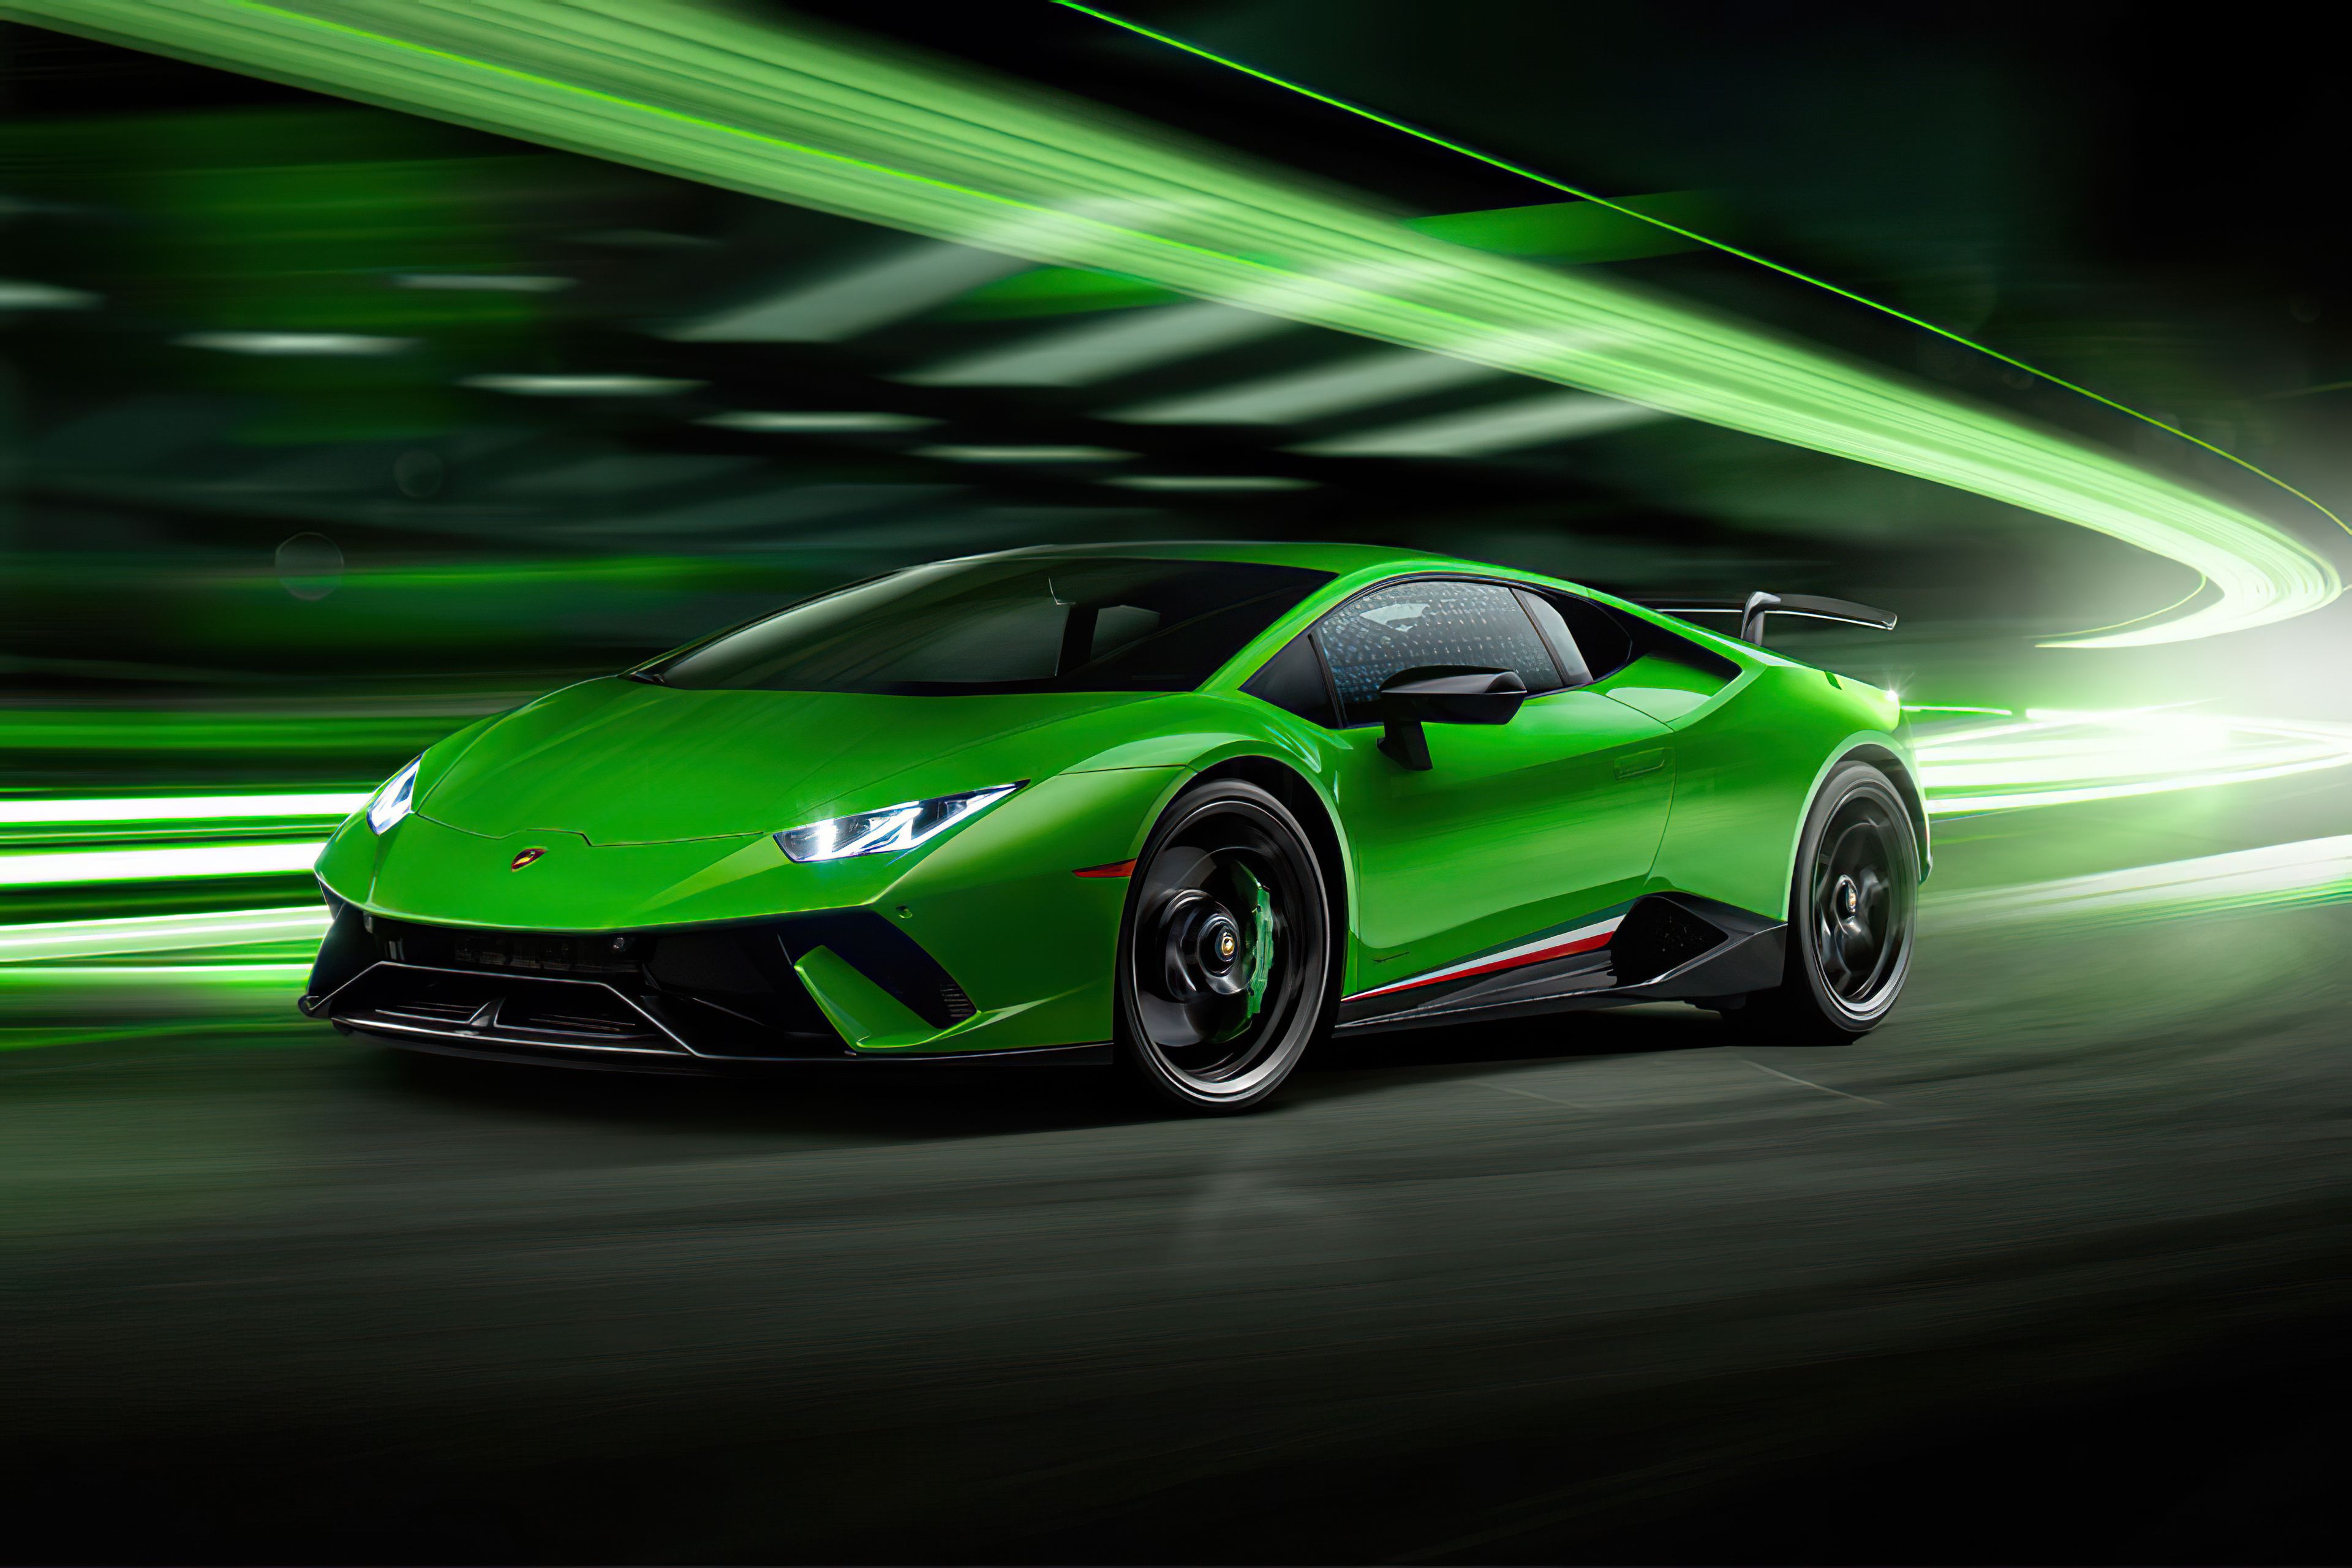 Lamborghini Green Car Hd K Wallpapers Wallpaper Cave